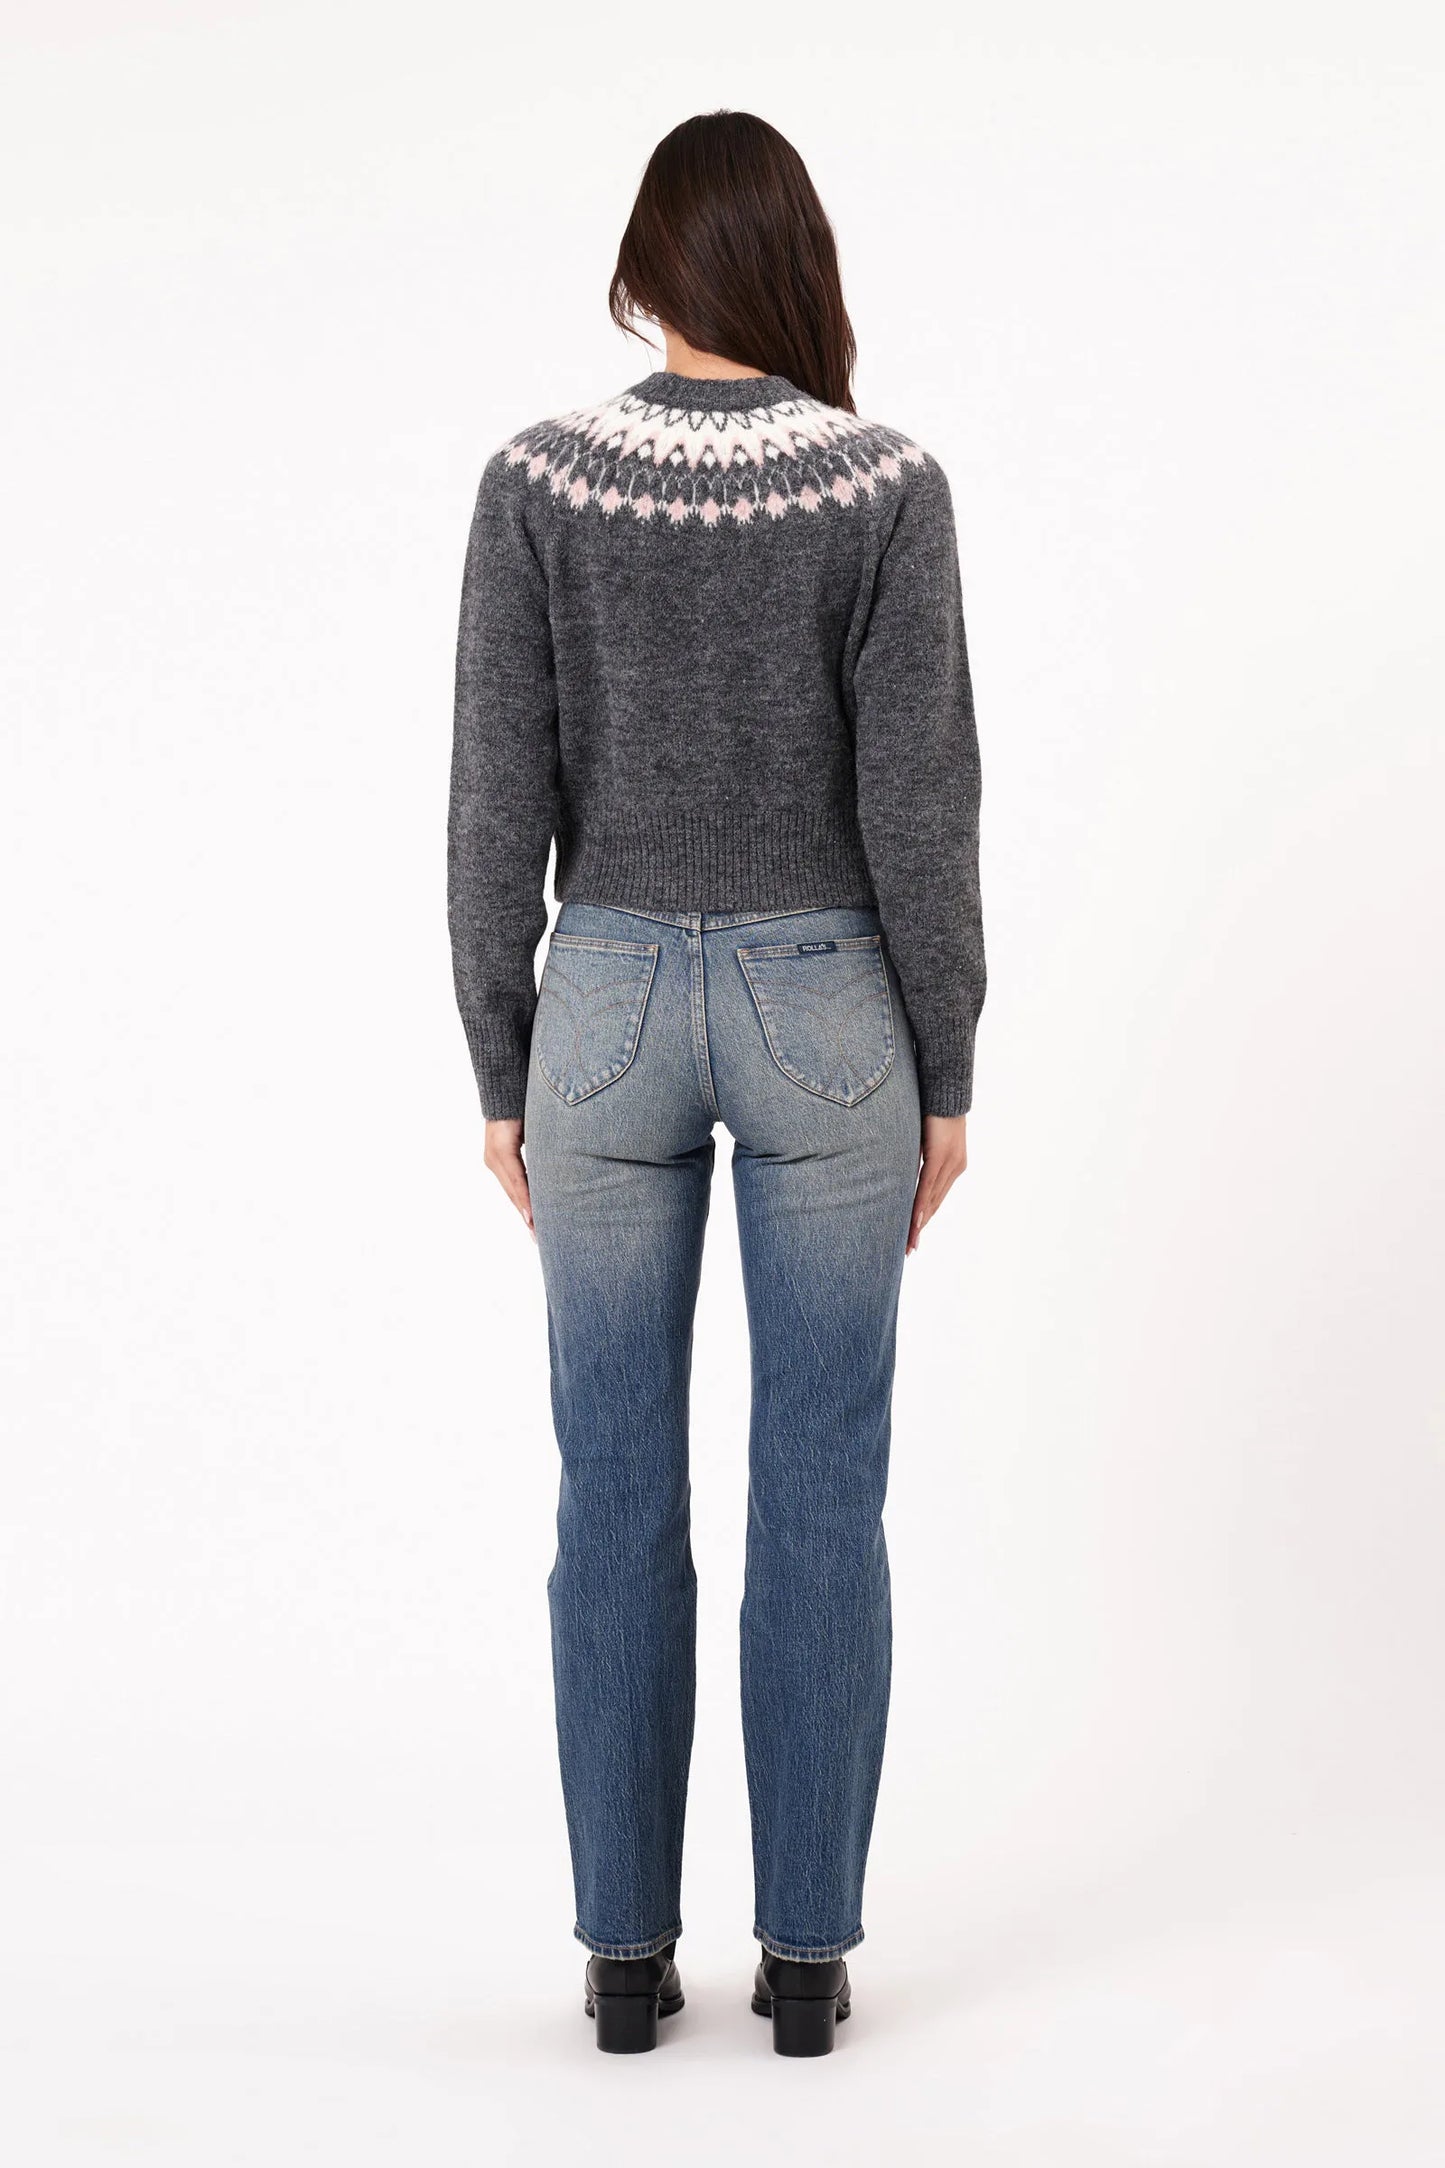 Rolla’s Fair Isle Knit Sweater Vintage Black